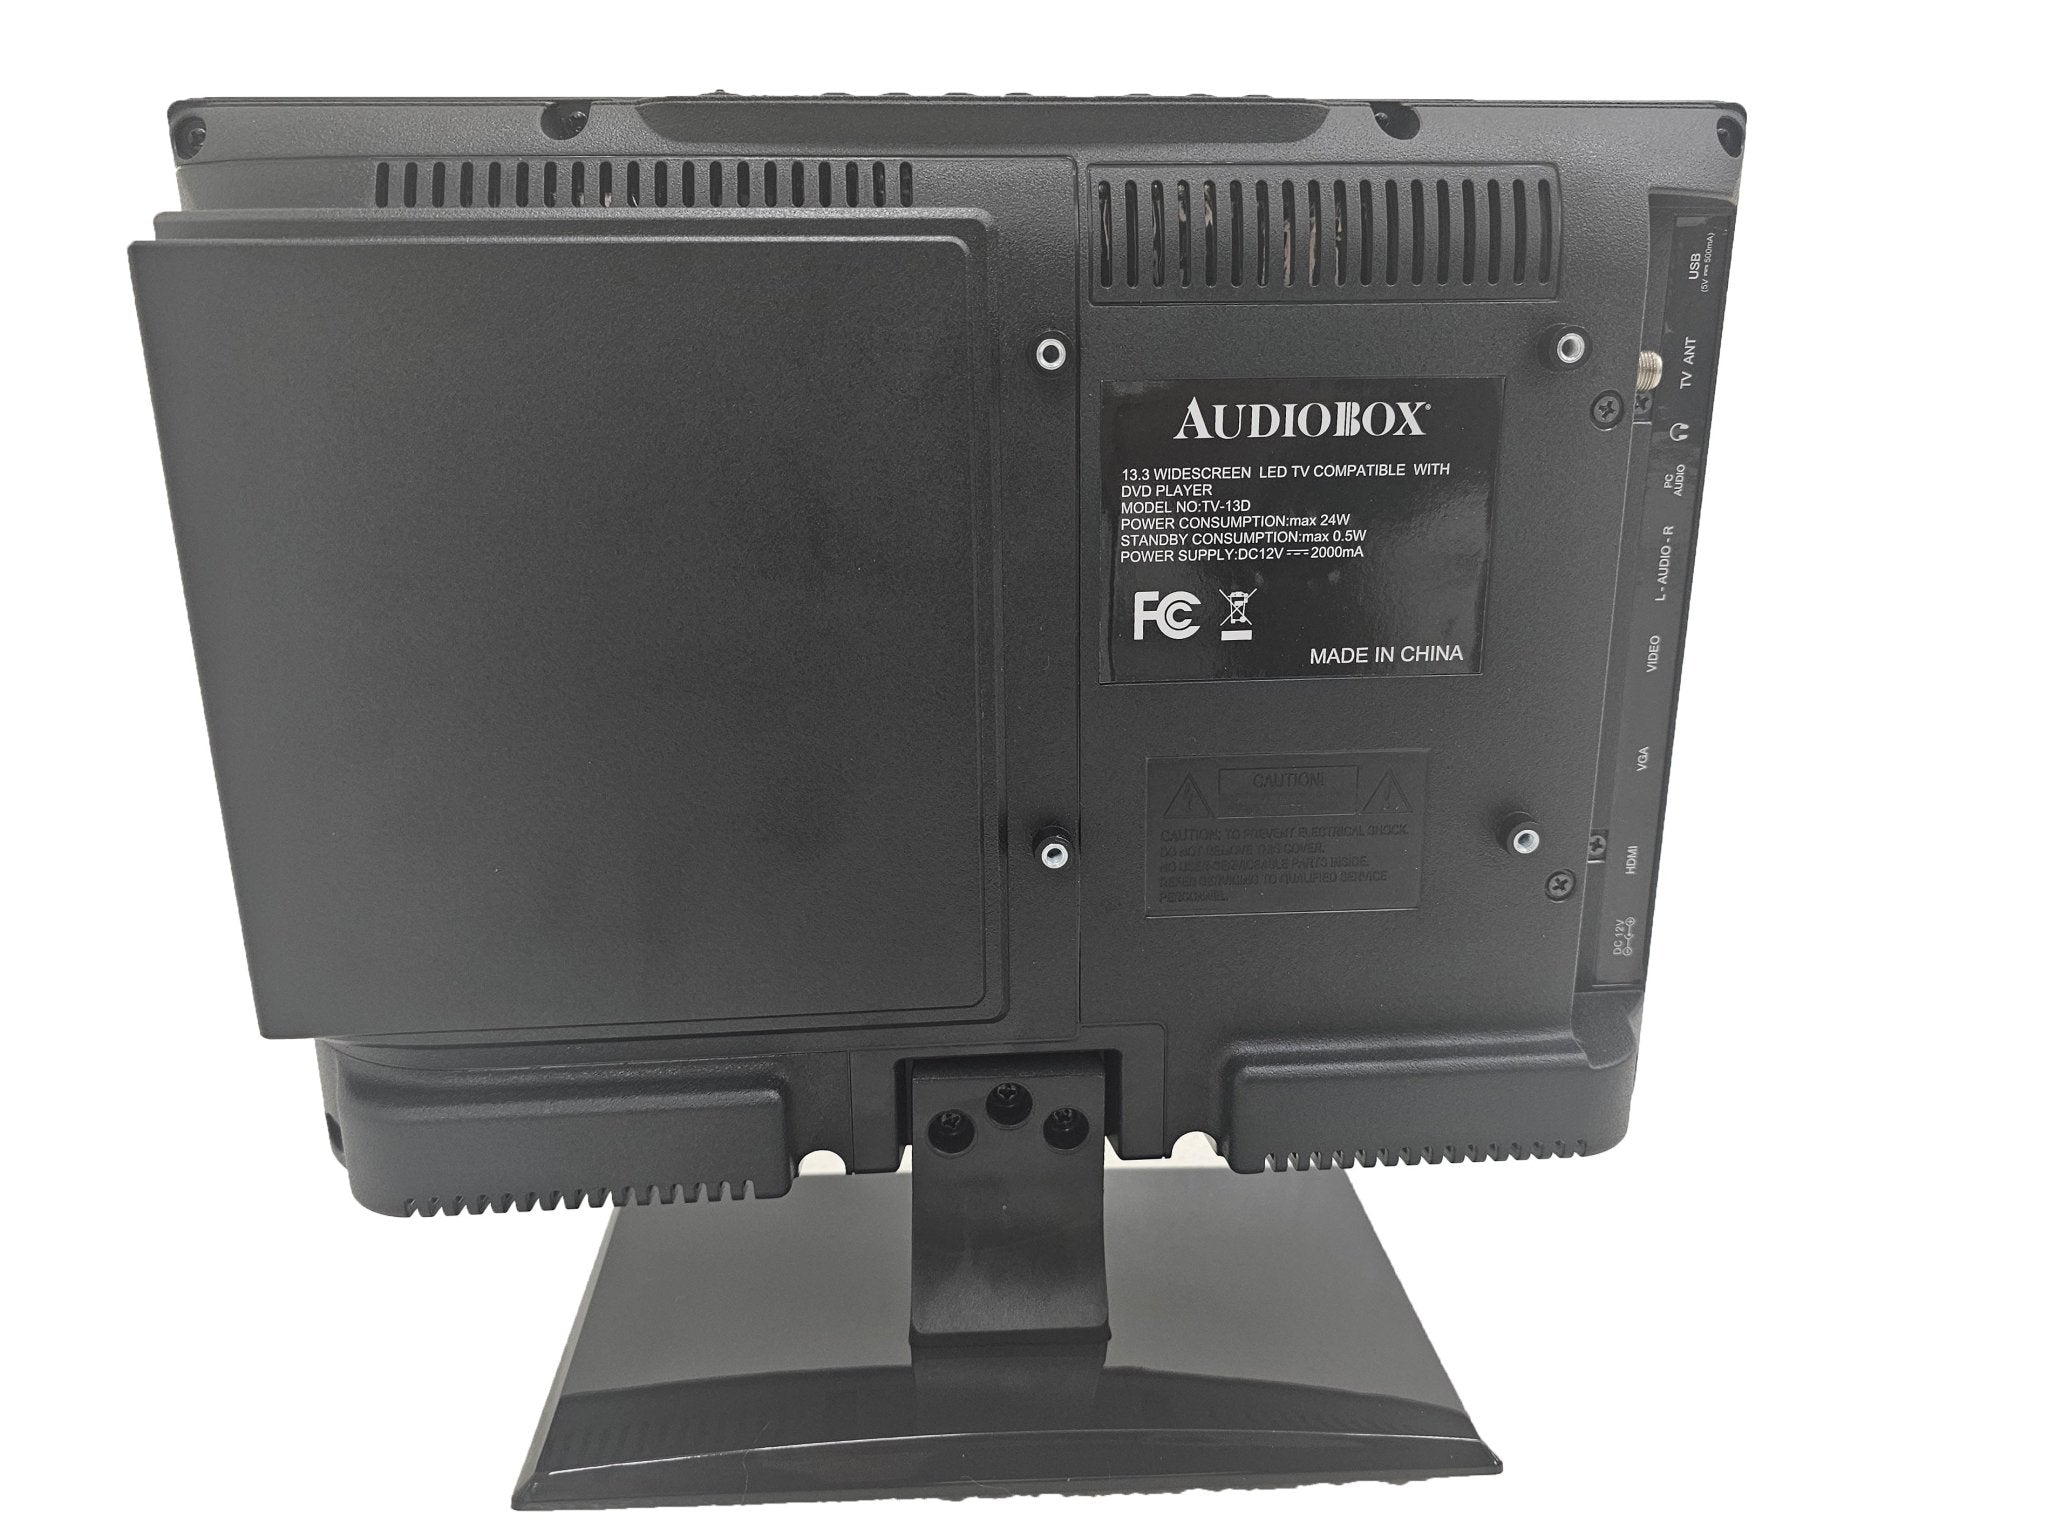 Audiobox TV-13D Portable 13